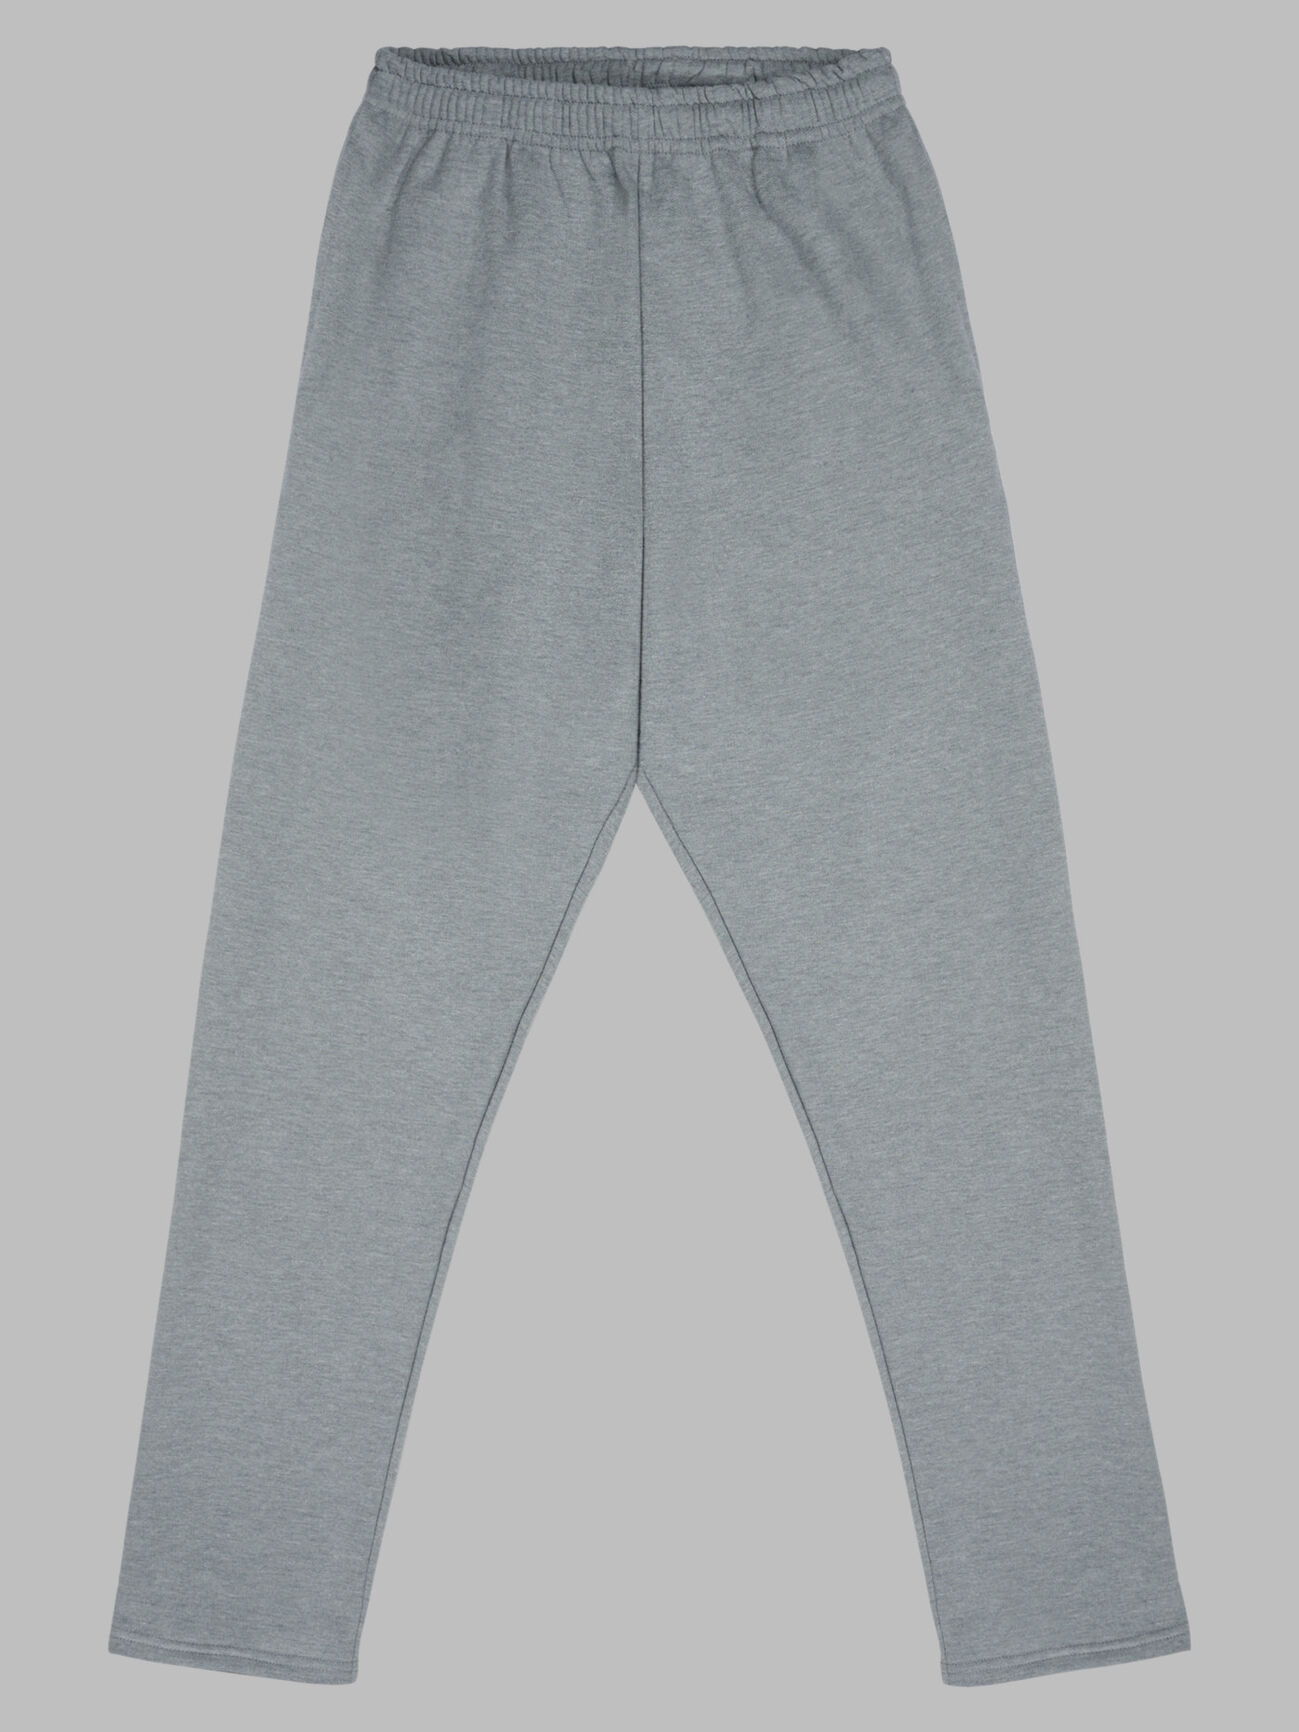 All Day Sweatpants - Light Grey Heather –